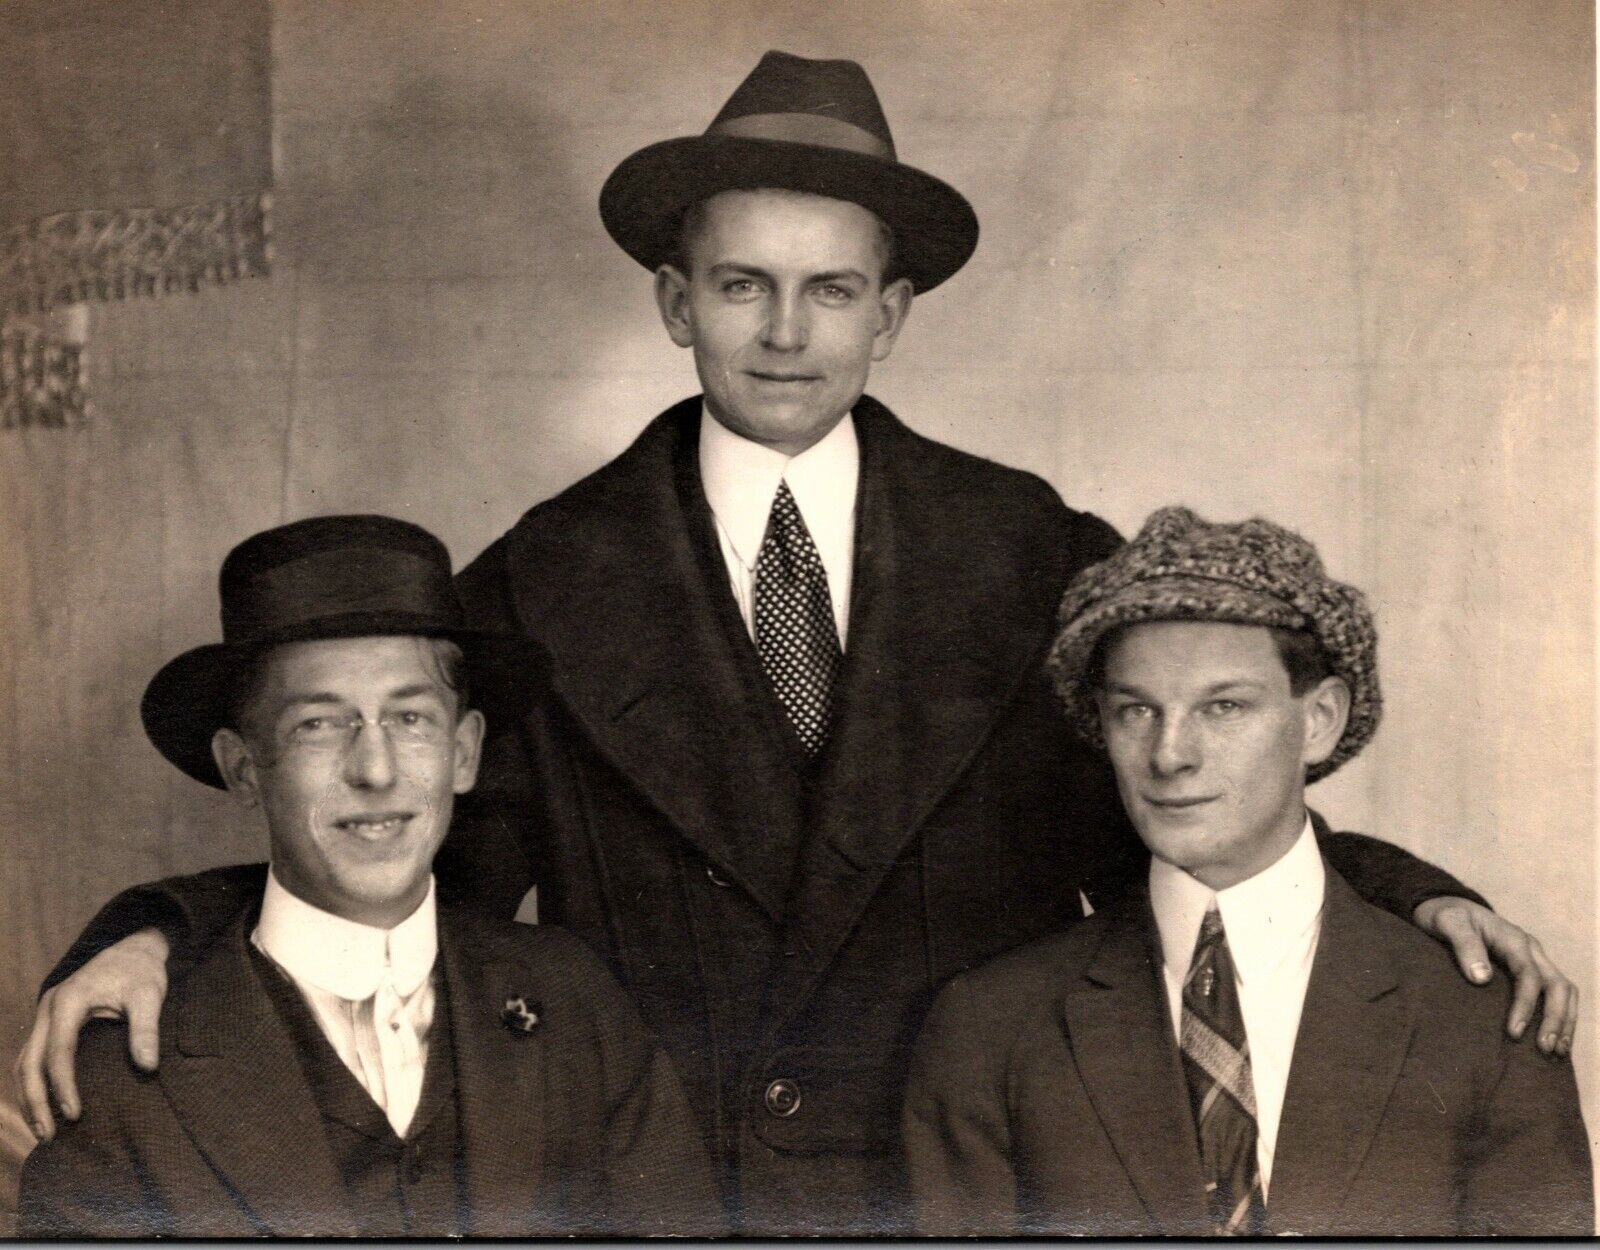 THREE SMILING MEN : WEARING GREAT HATS : FASHIONABLE : RPPC : (1904-1918)